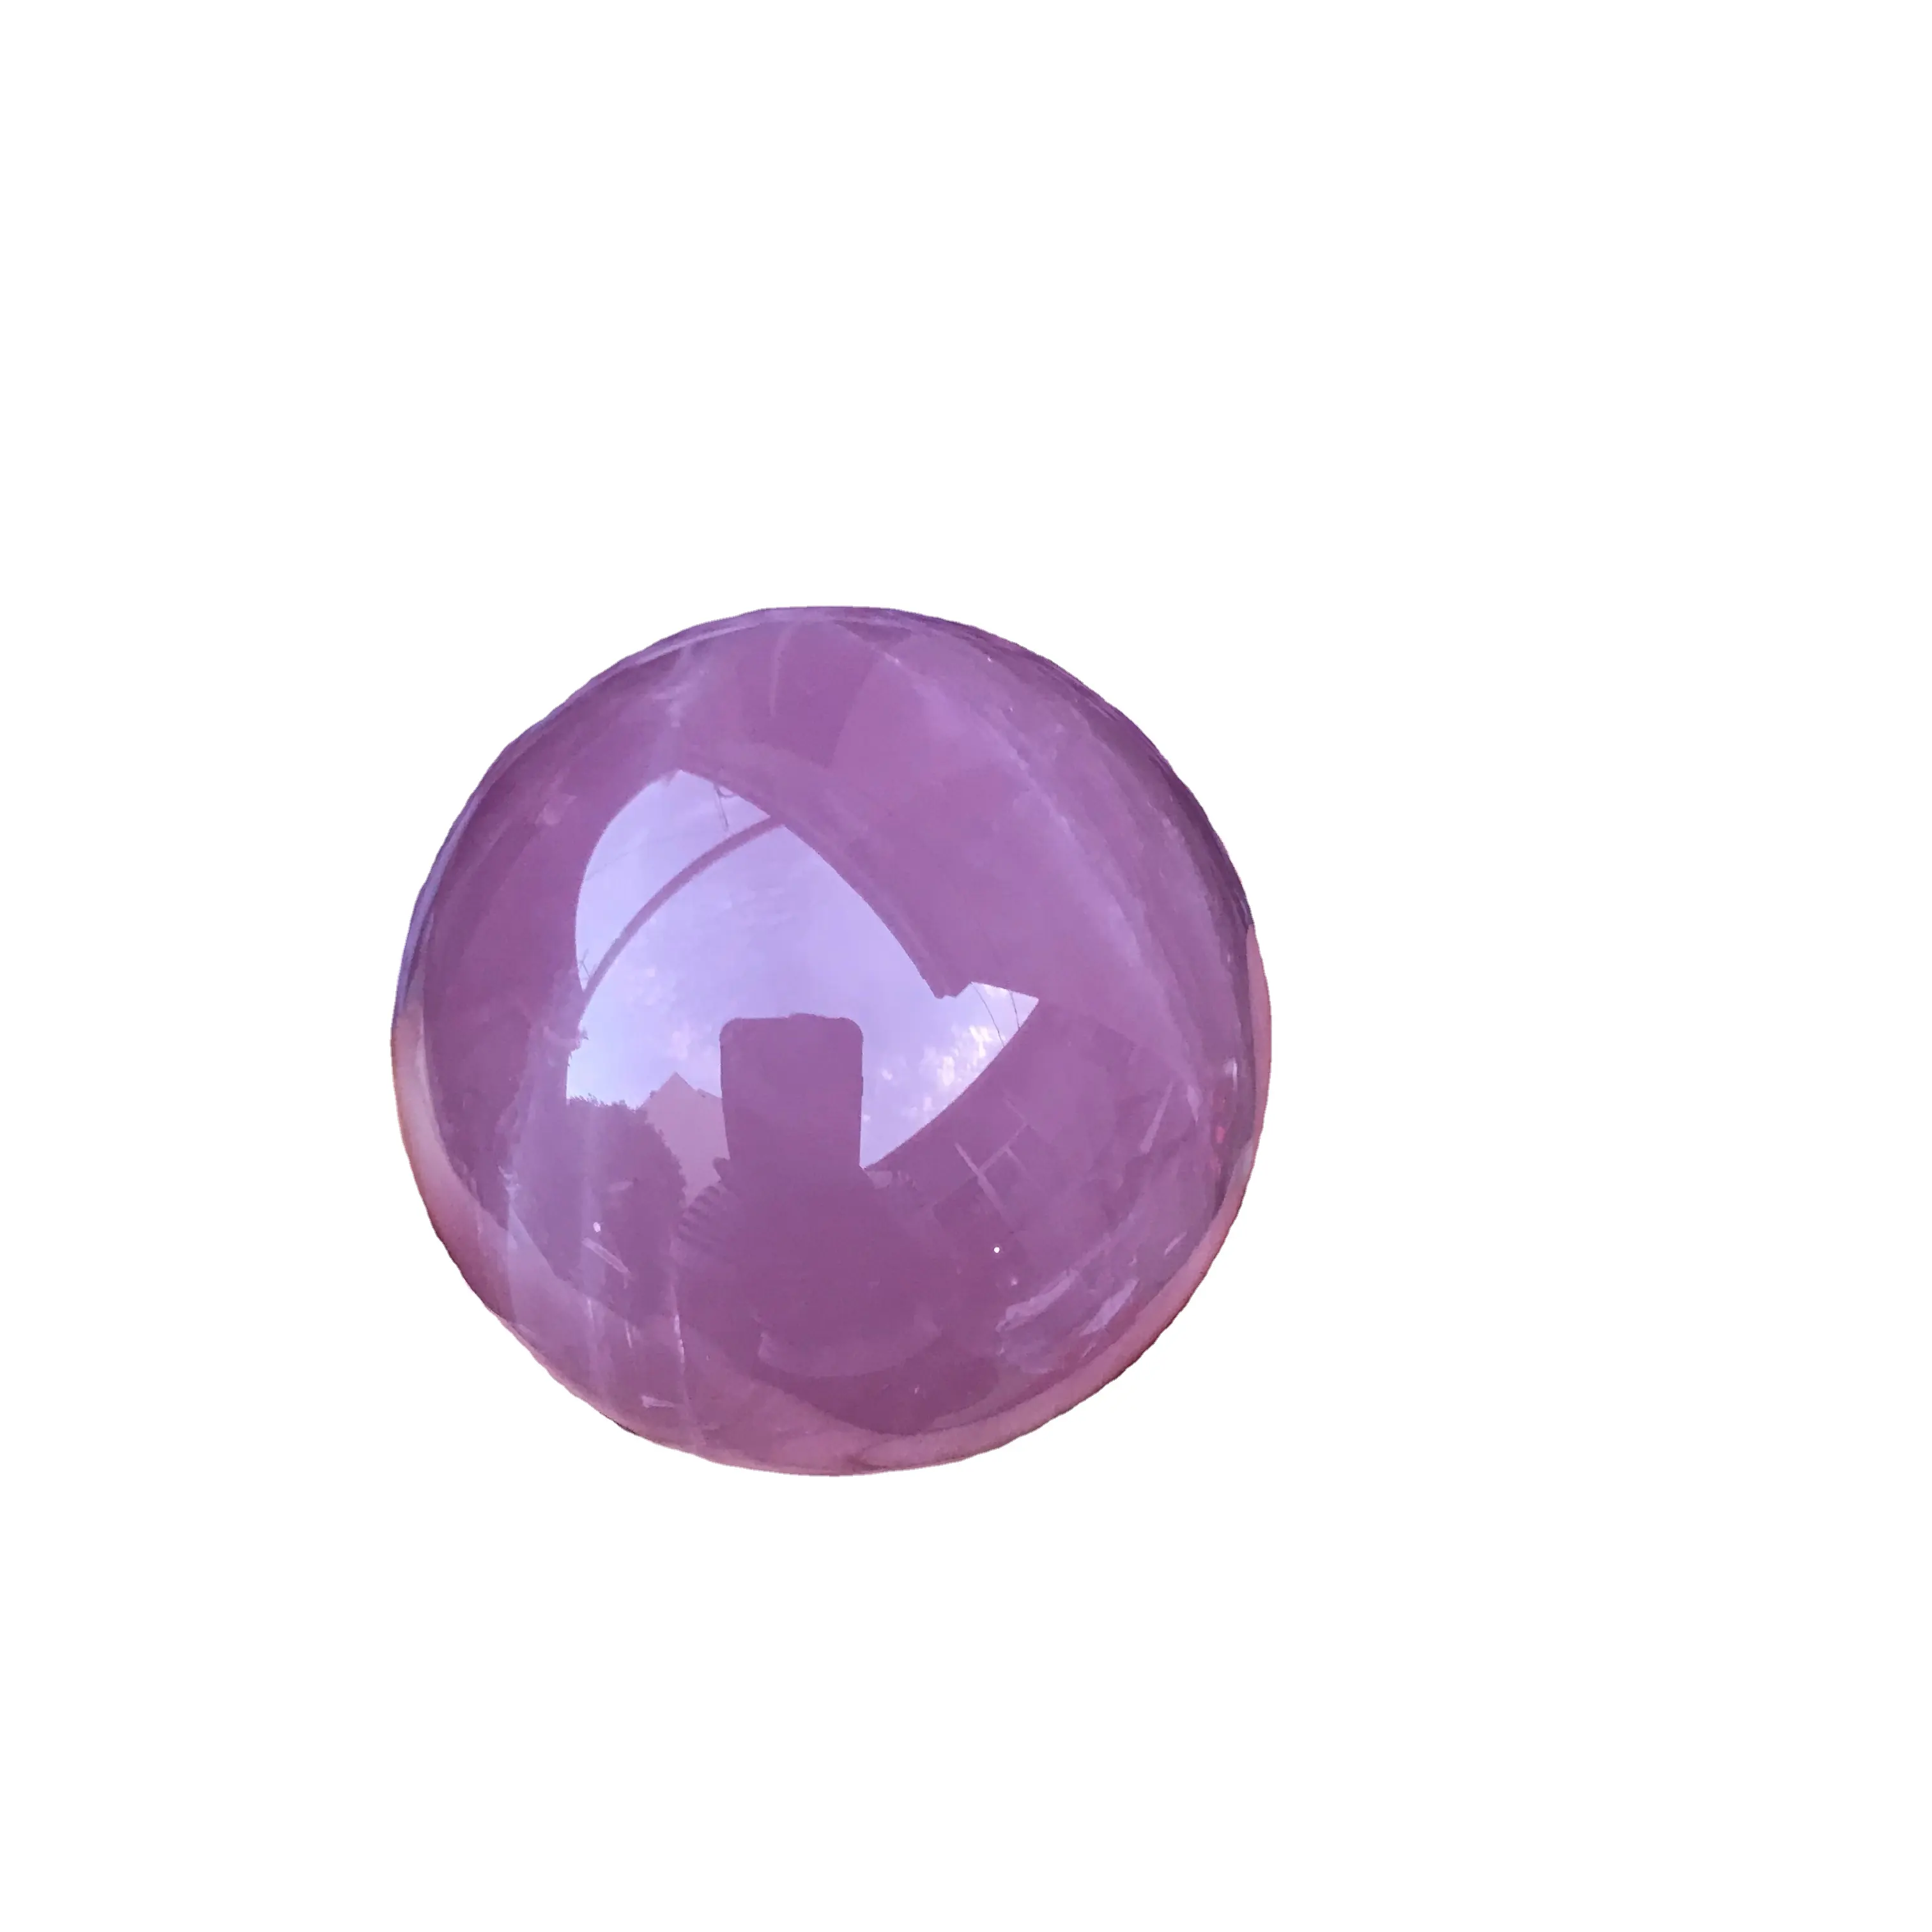 Wholesale natural dark rose quartz spheres hand Carved Crystal Ball Quartz Spheres with star light